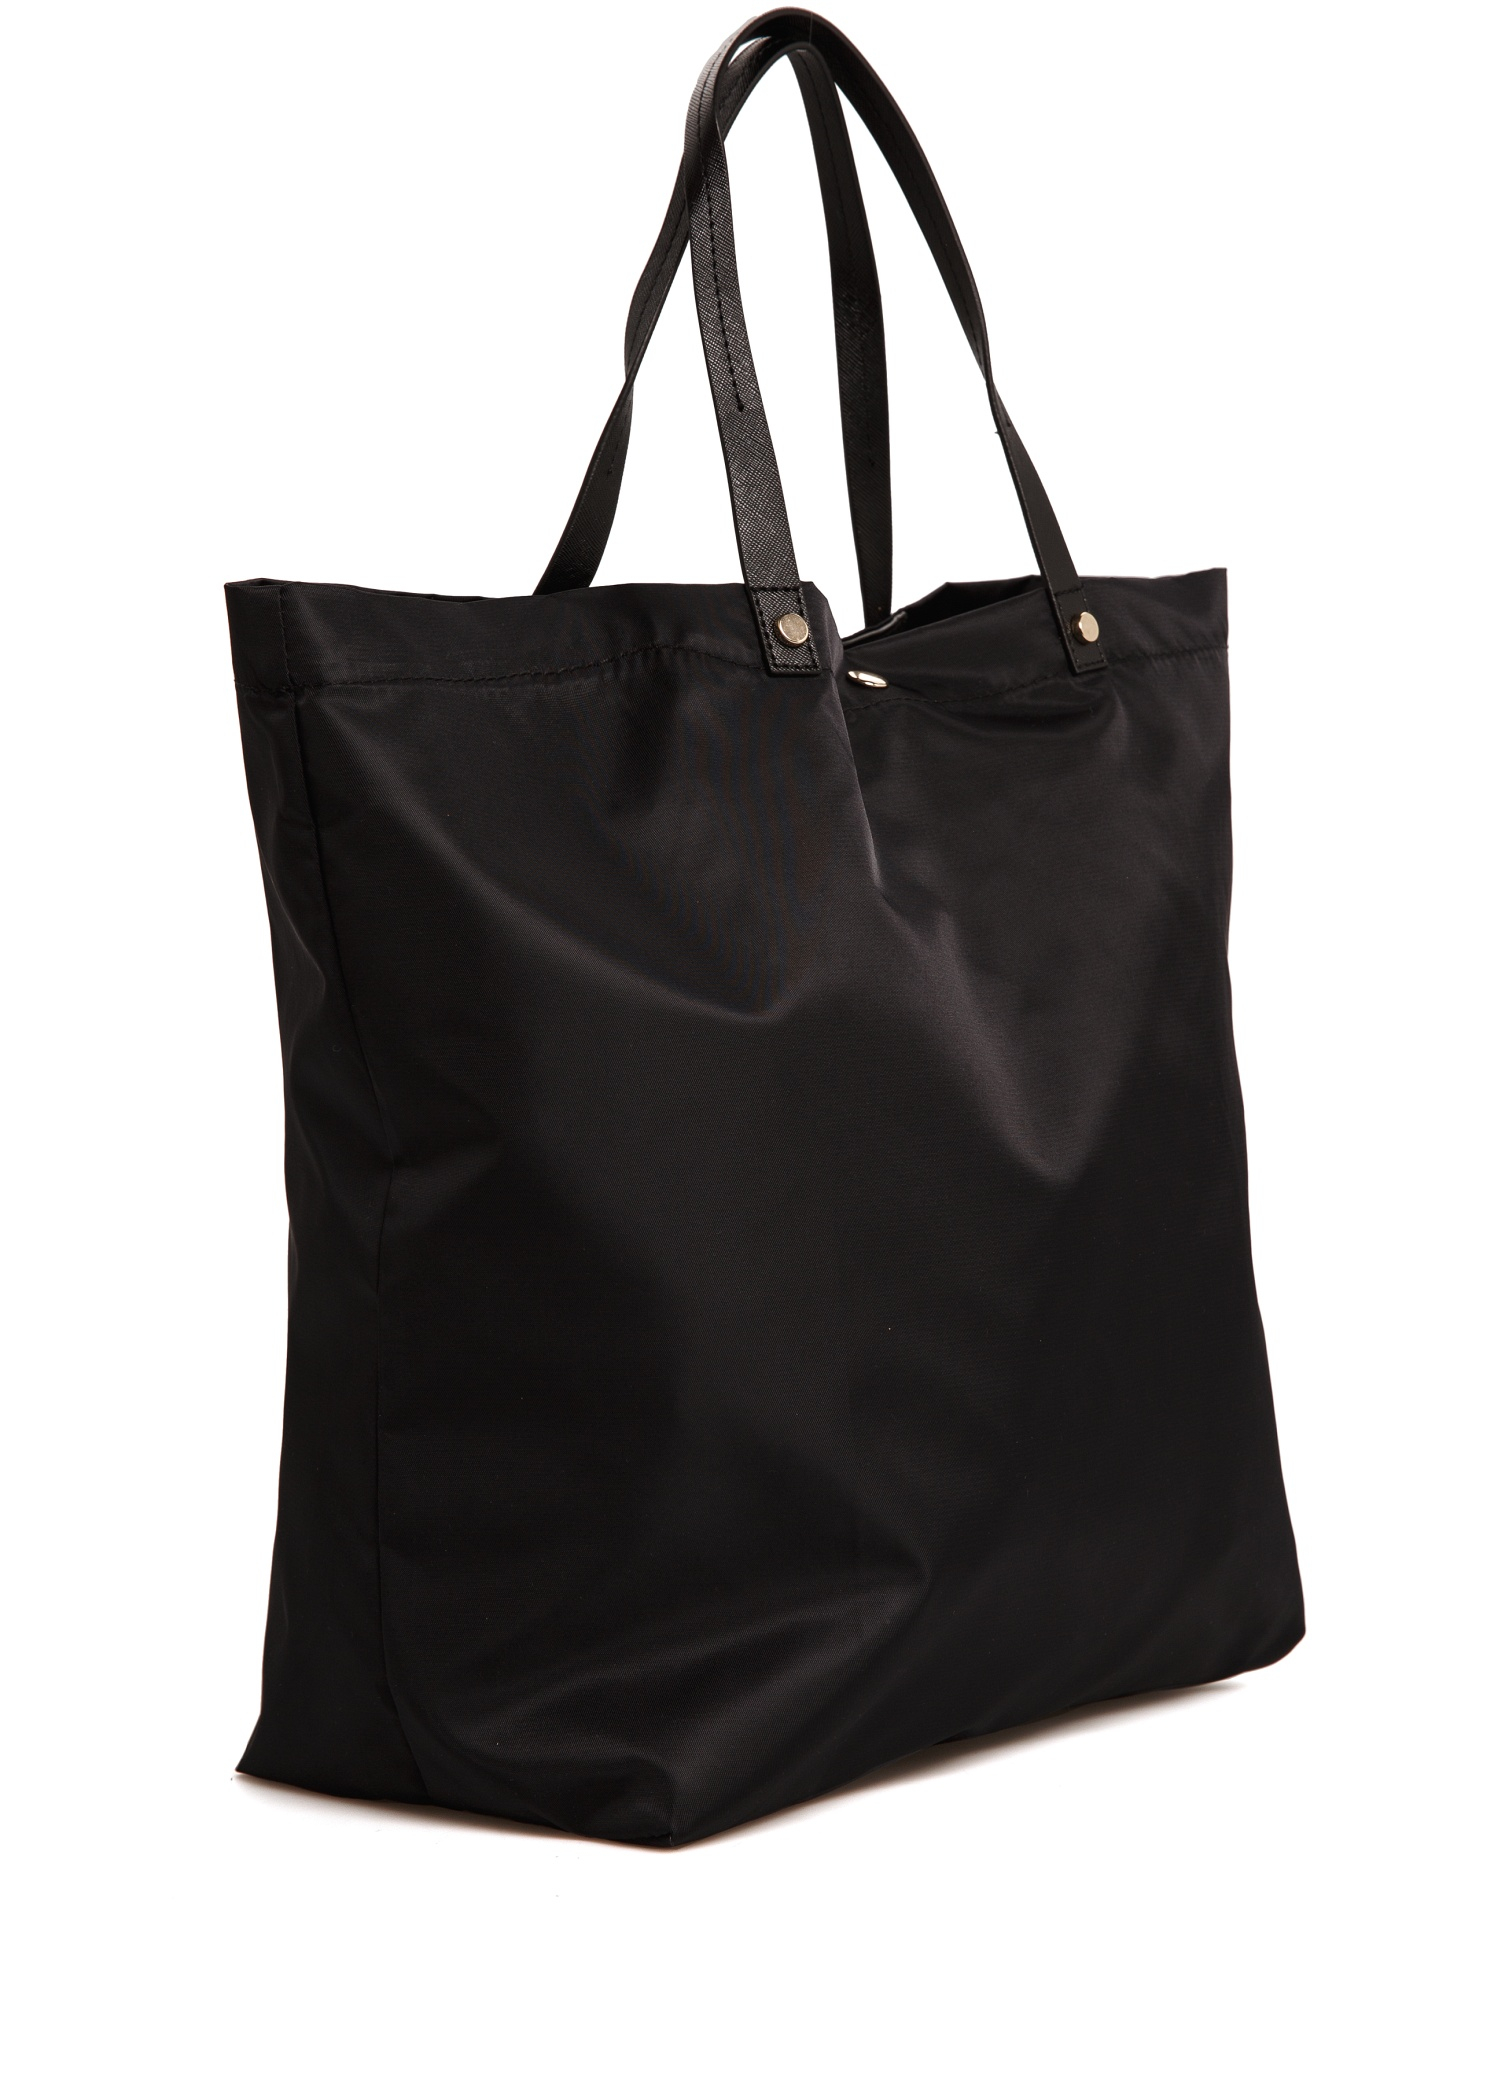 Lyst - Mango Nylon Shopper Bag in Black